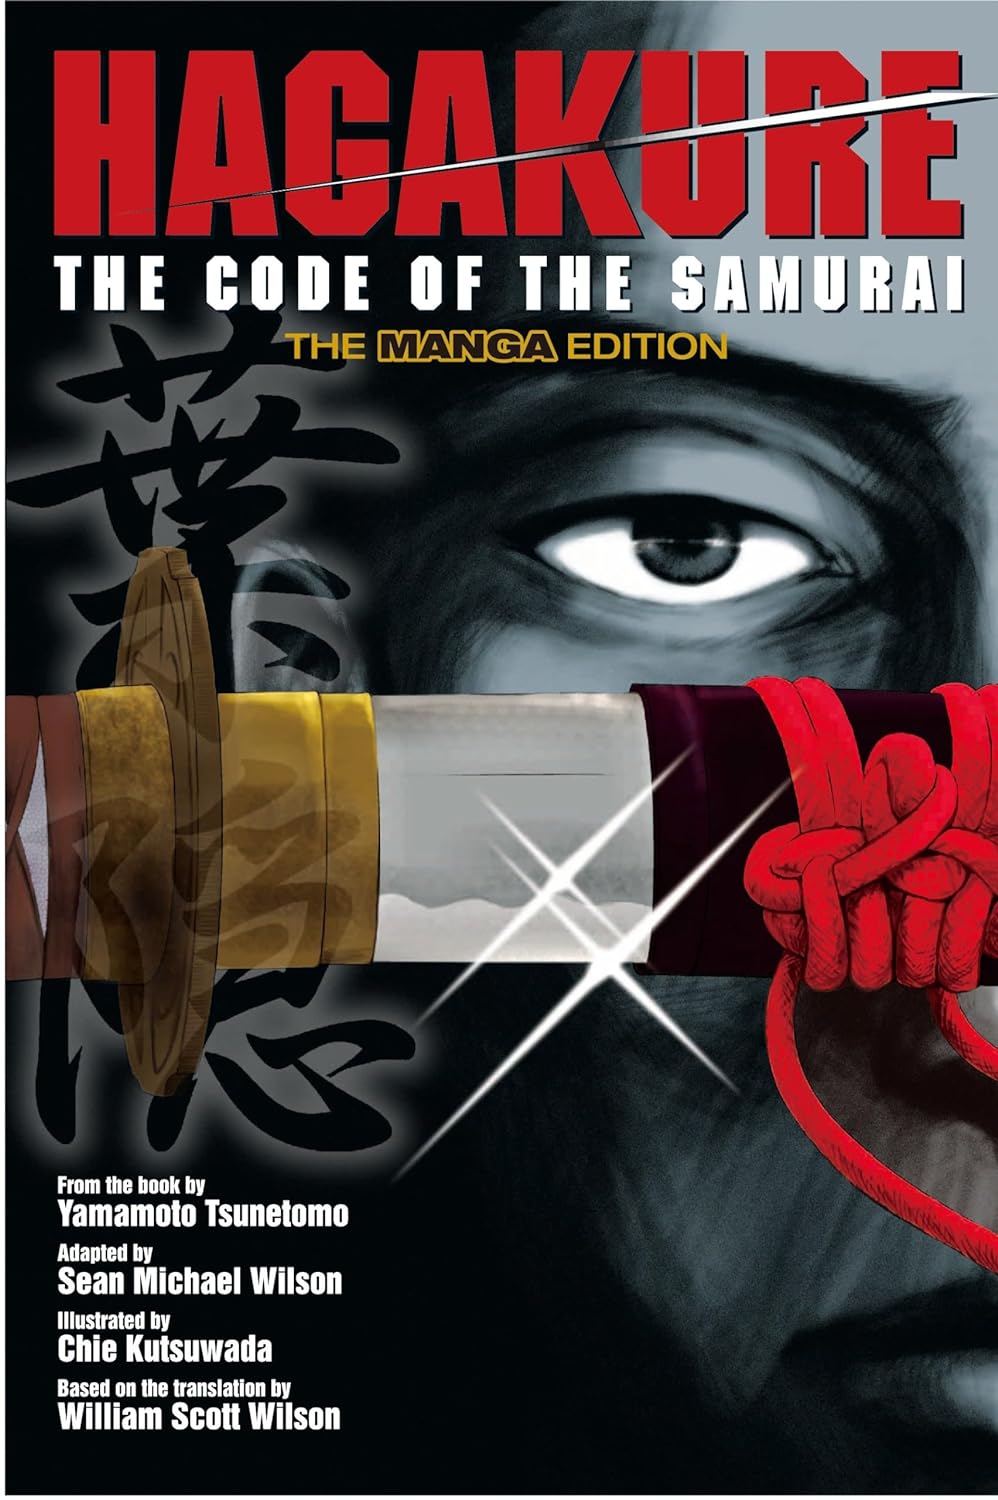 Hagakure: The Code of the Samurai: A Graphic Novel by Tsunetomo Yamamoto